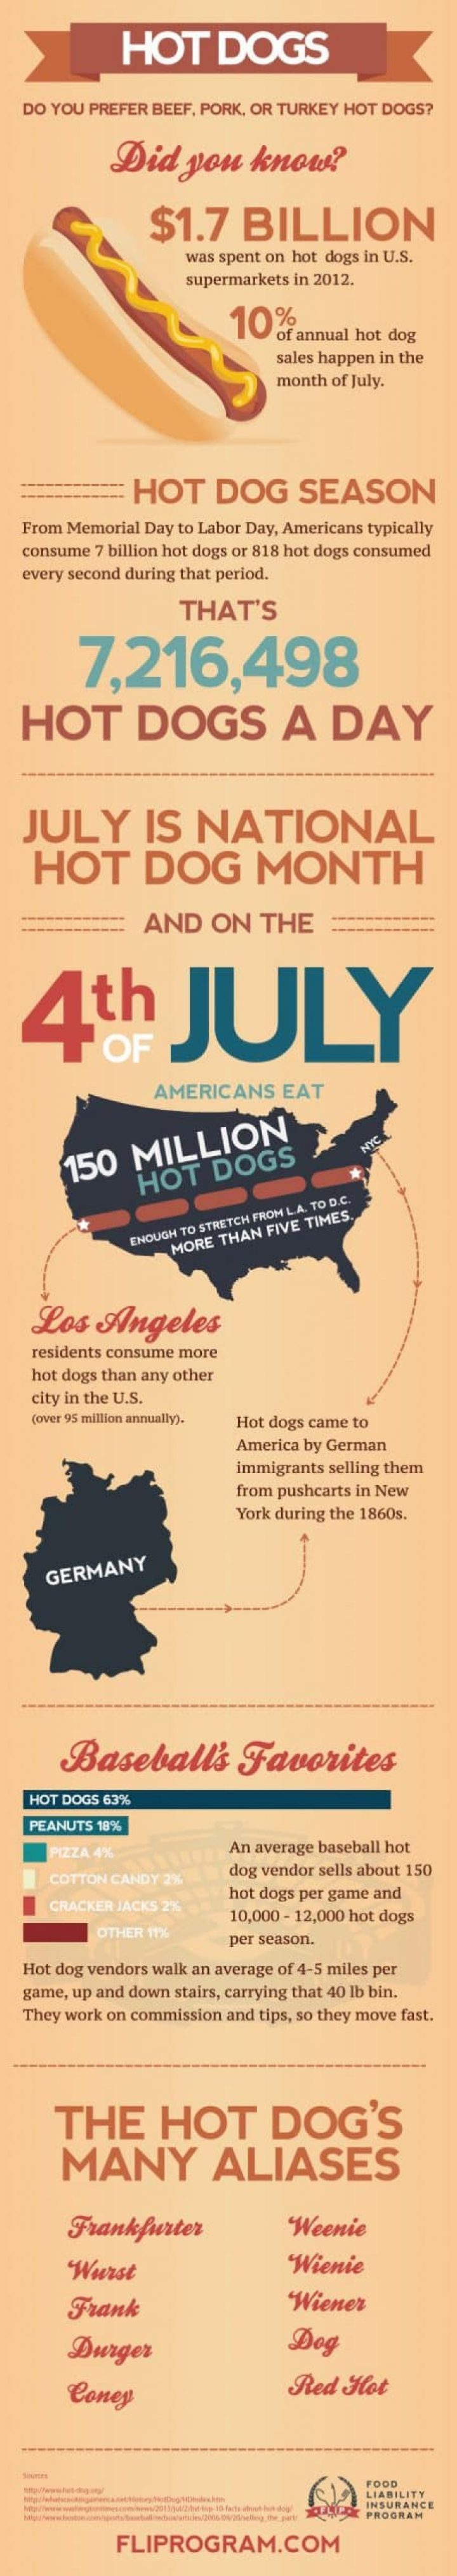 hotdog-infographic-2